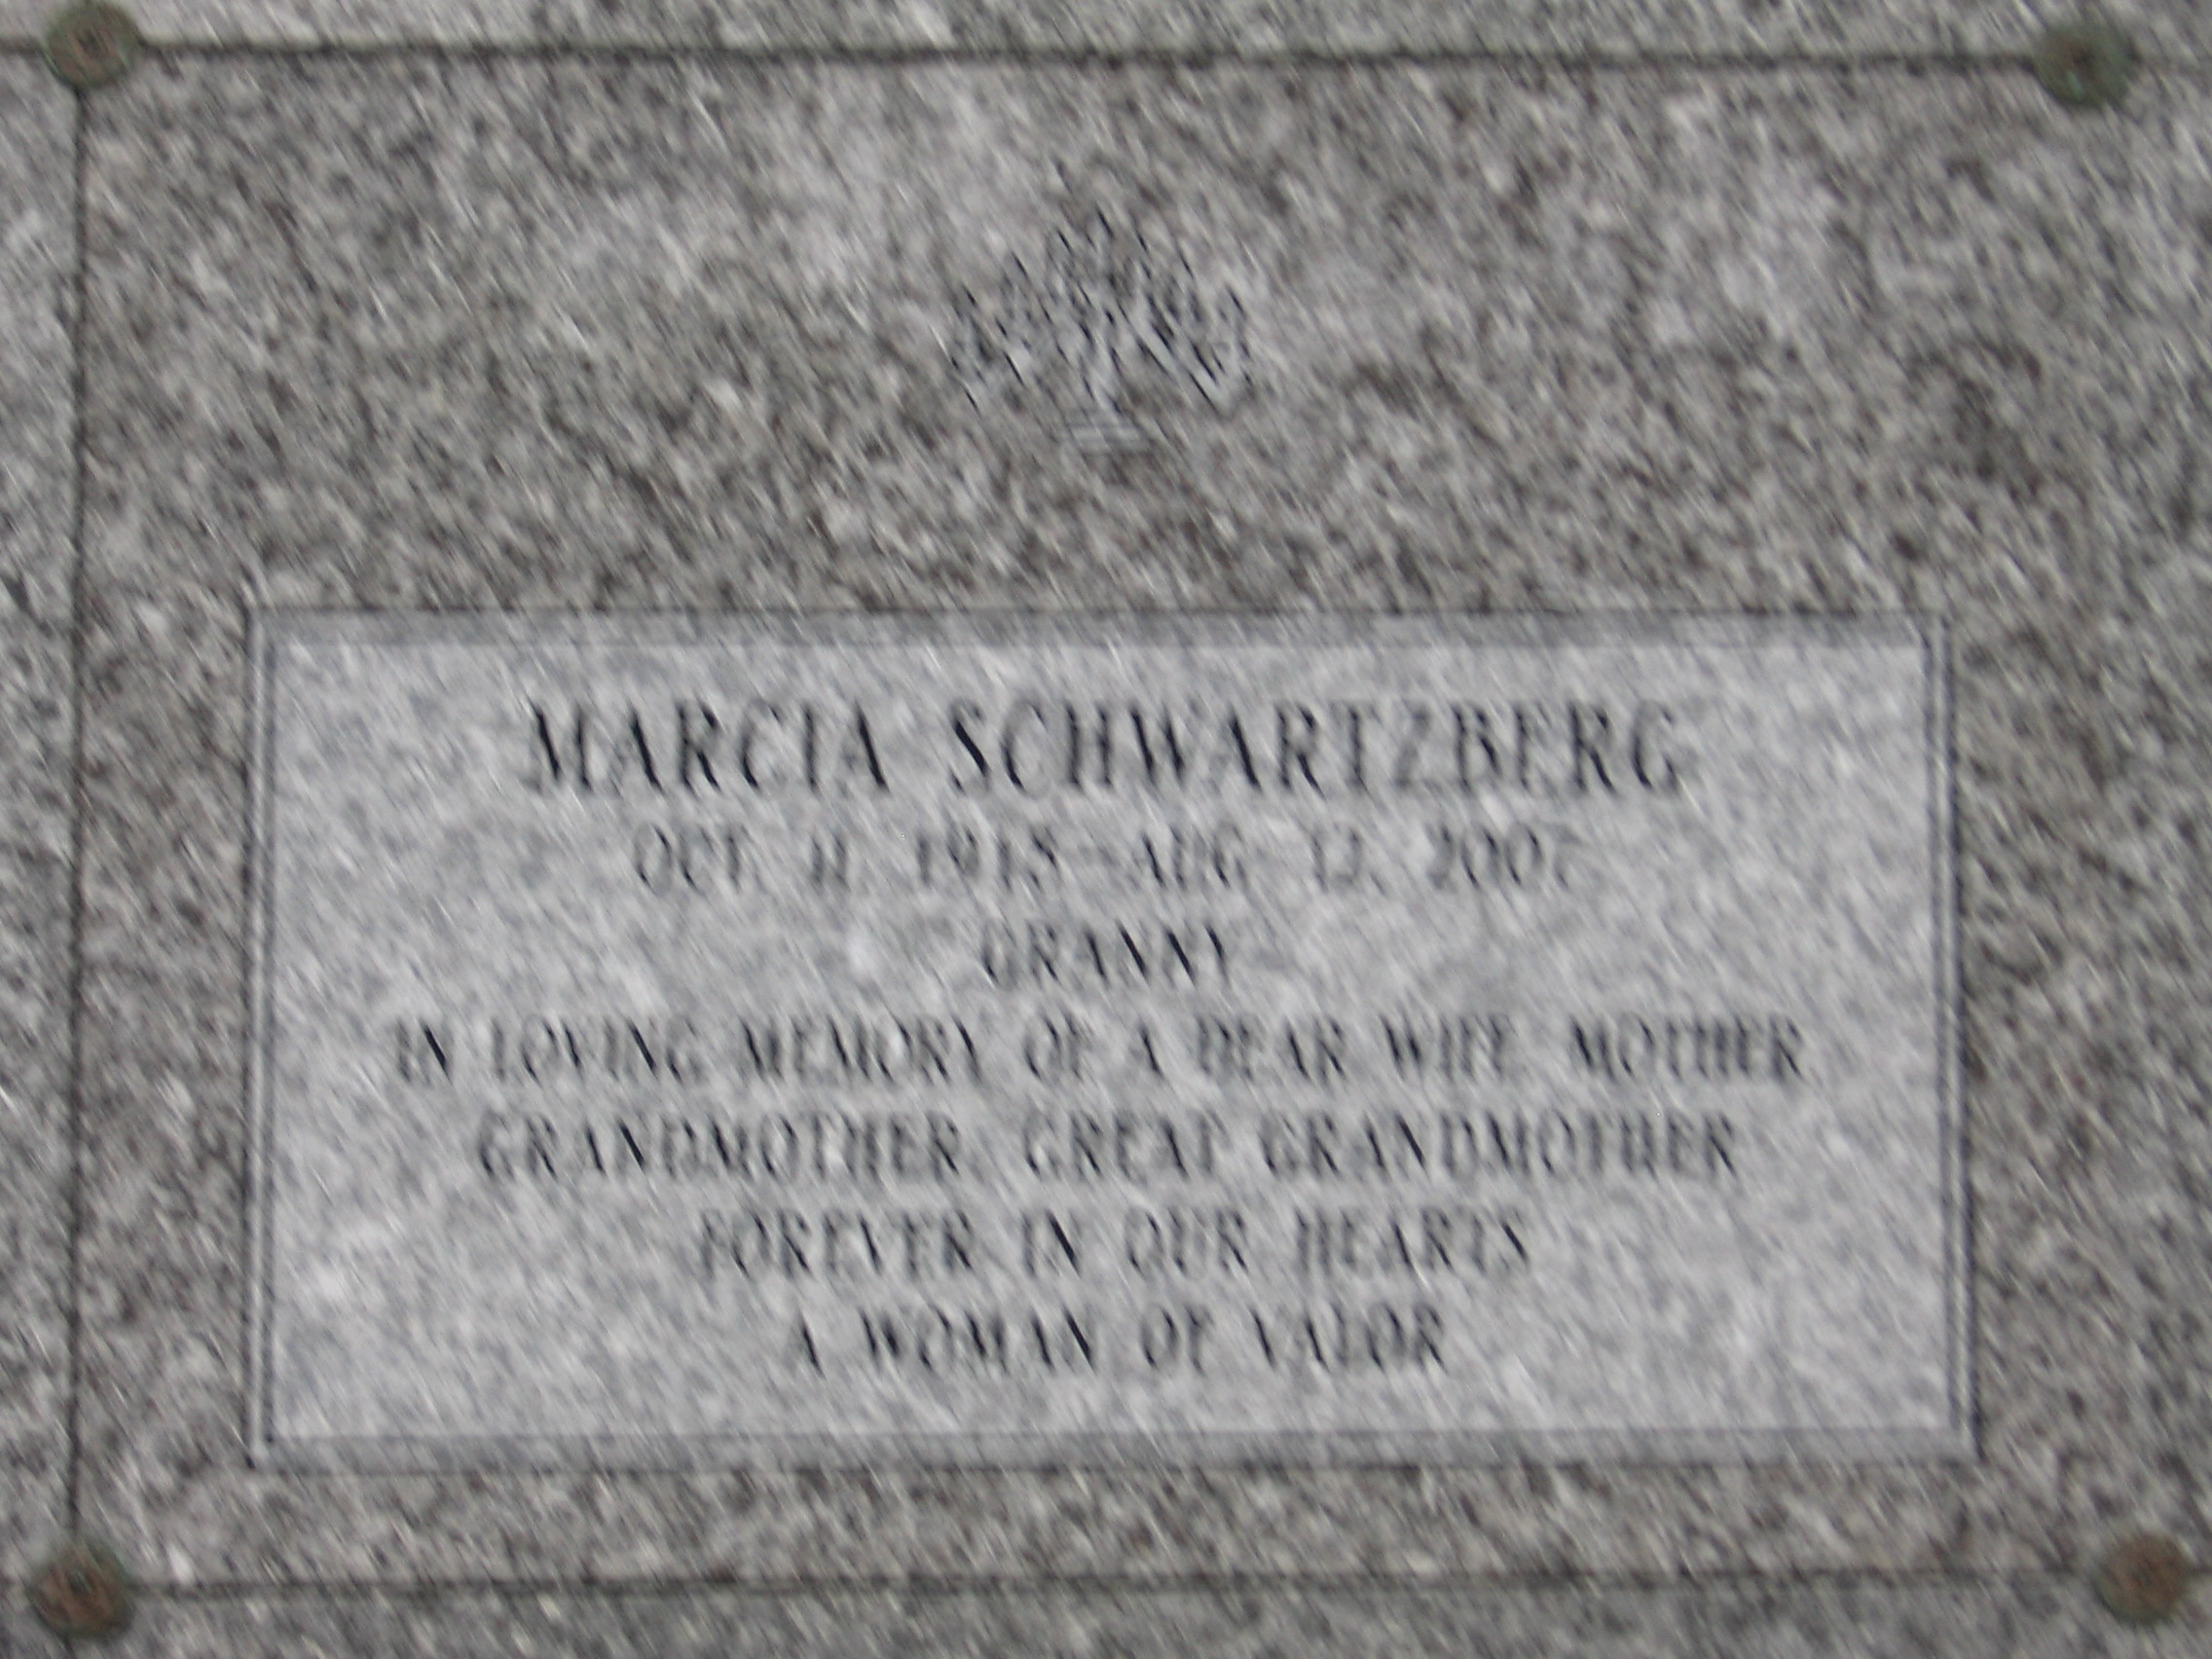 Marcia "Granny" Schwartzberg